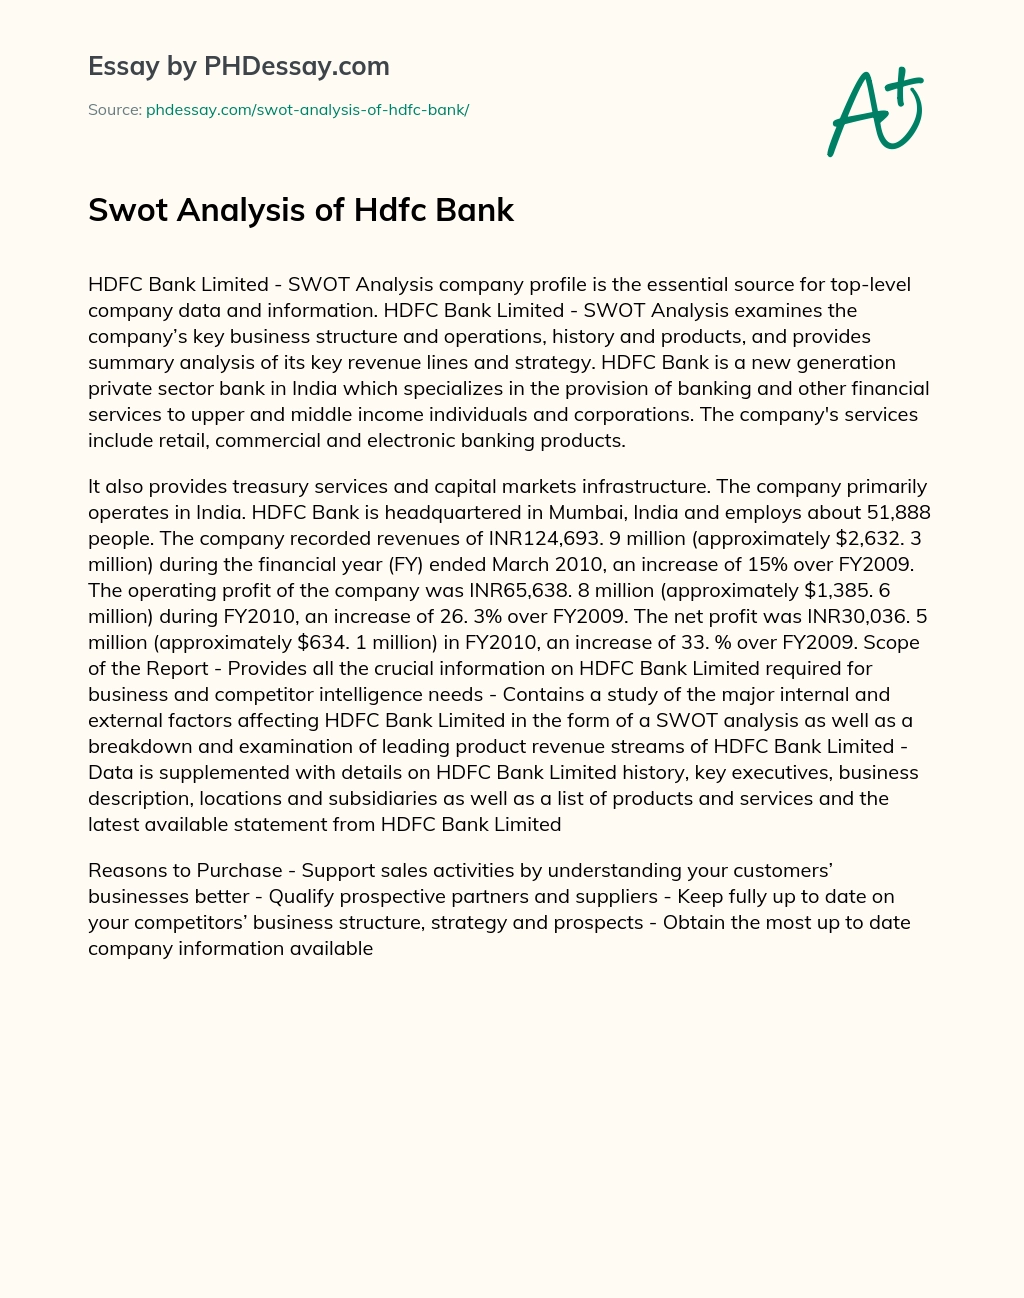 Swot Analysis of Hdfc Bank essay